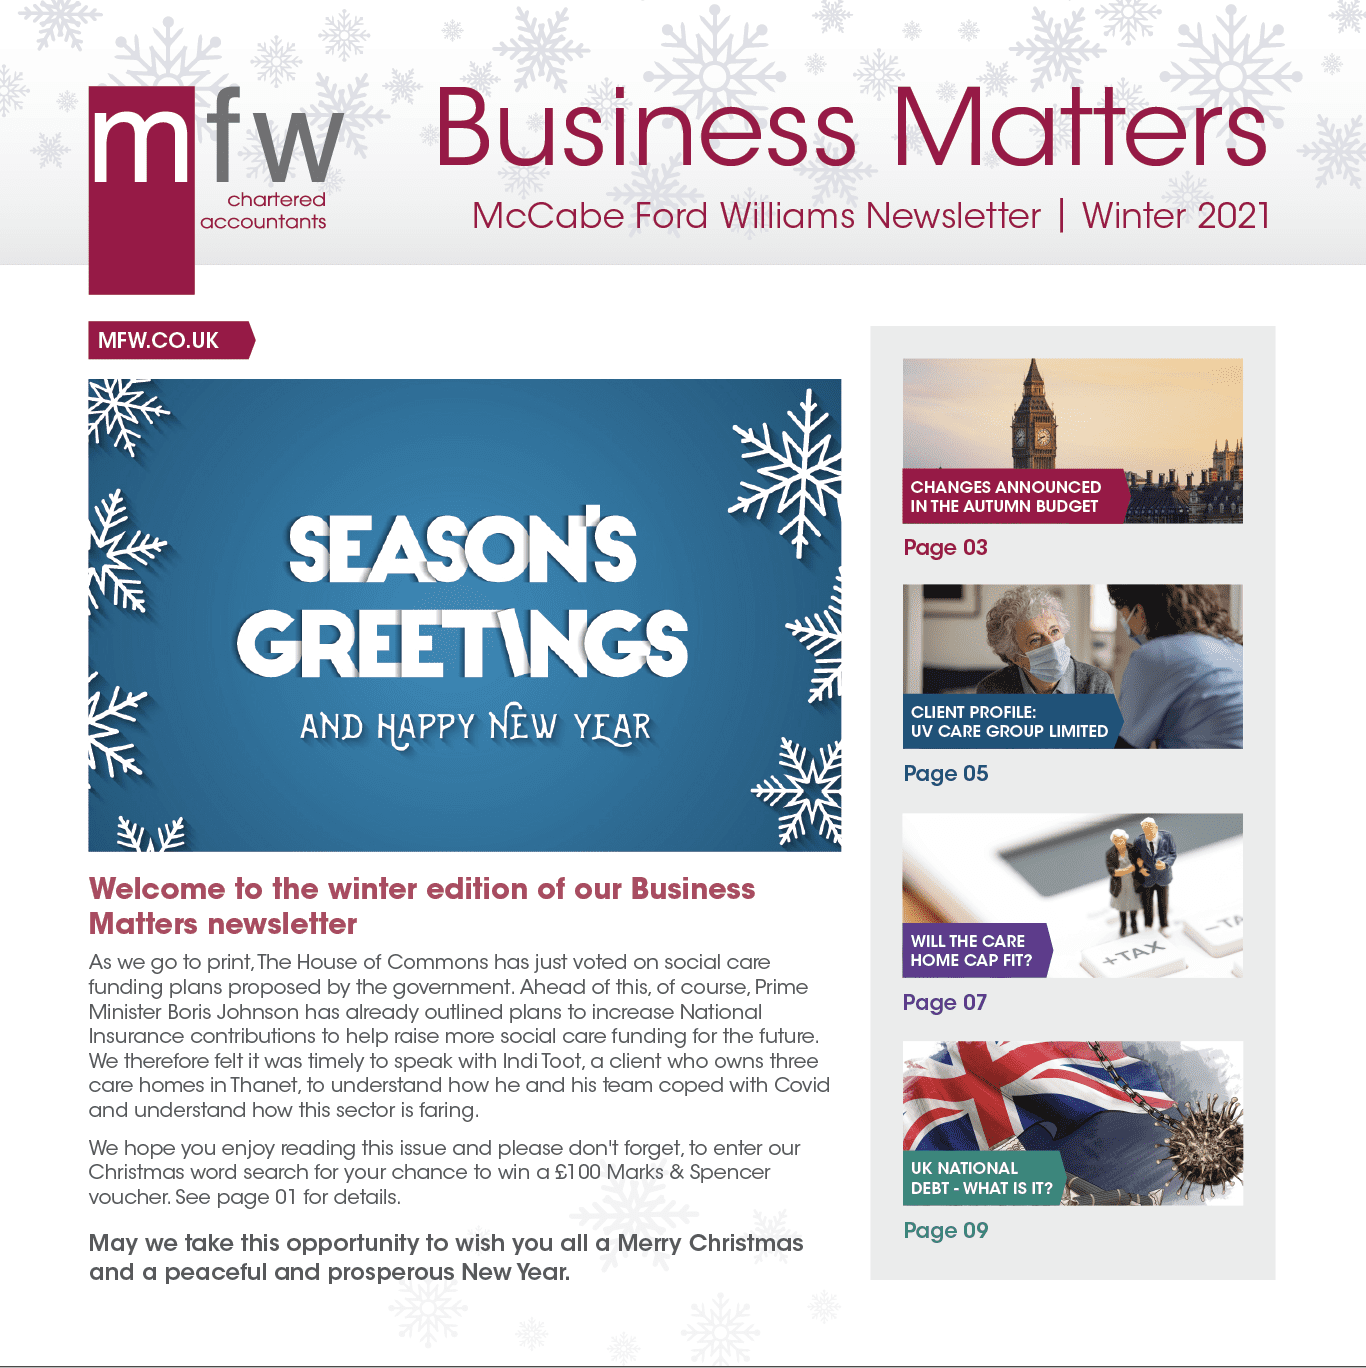 MFW Business Matters winter 2021 newsletter